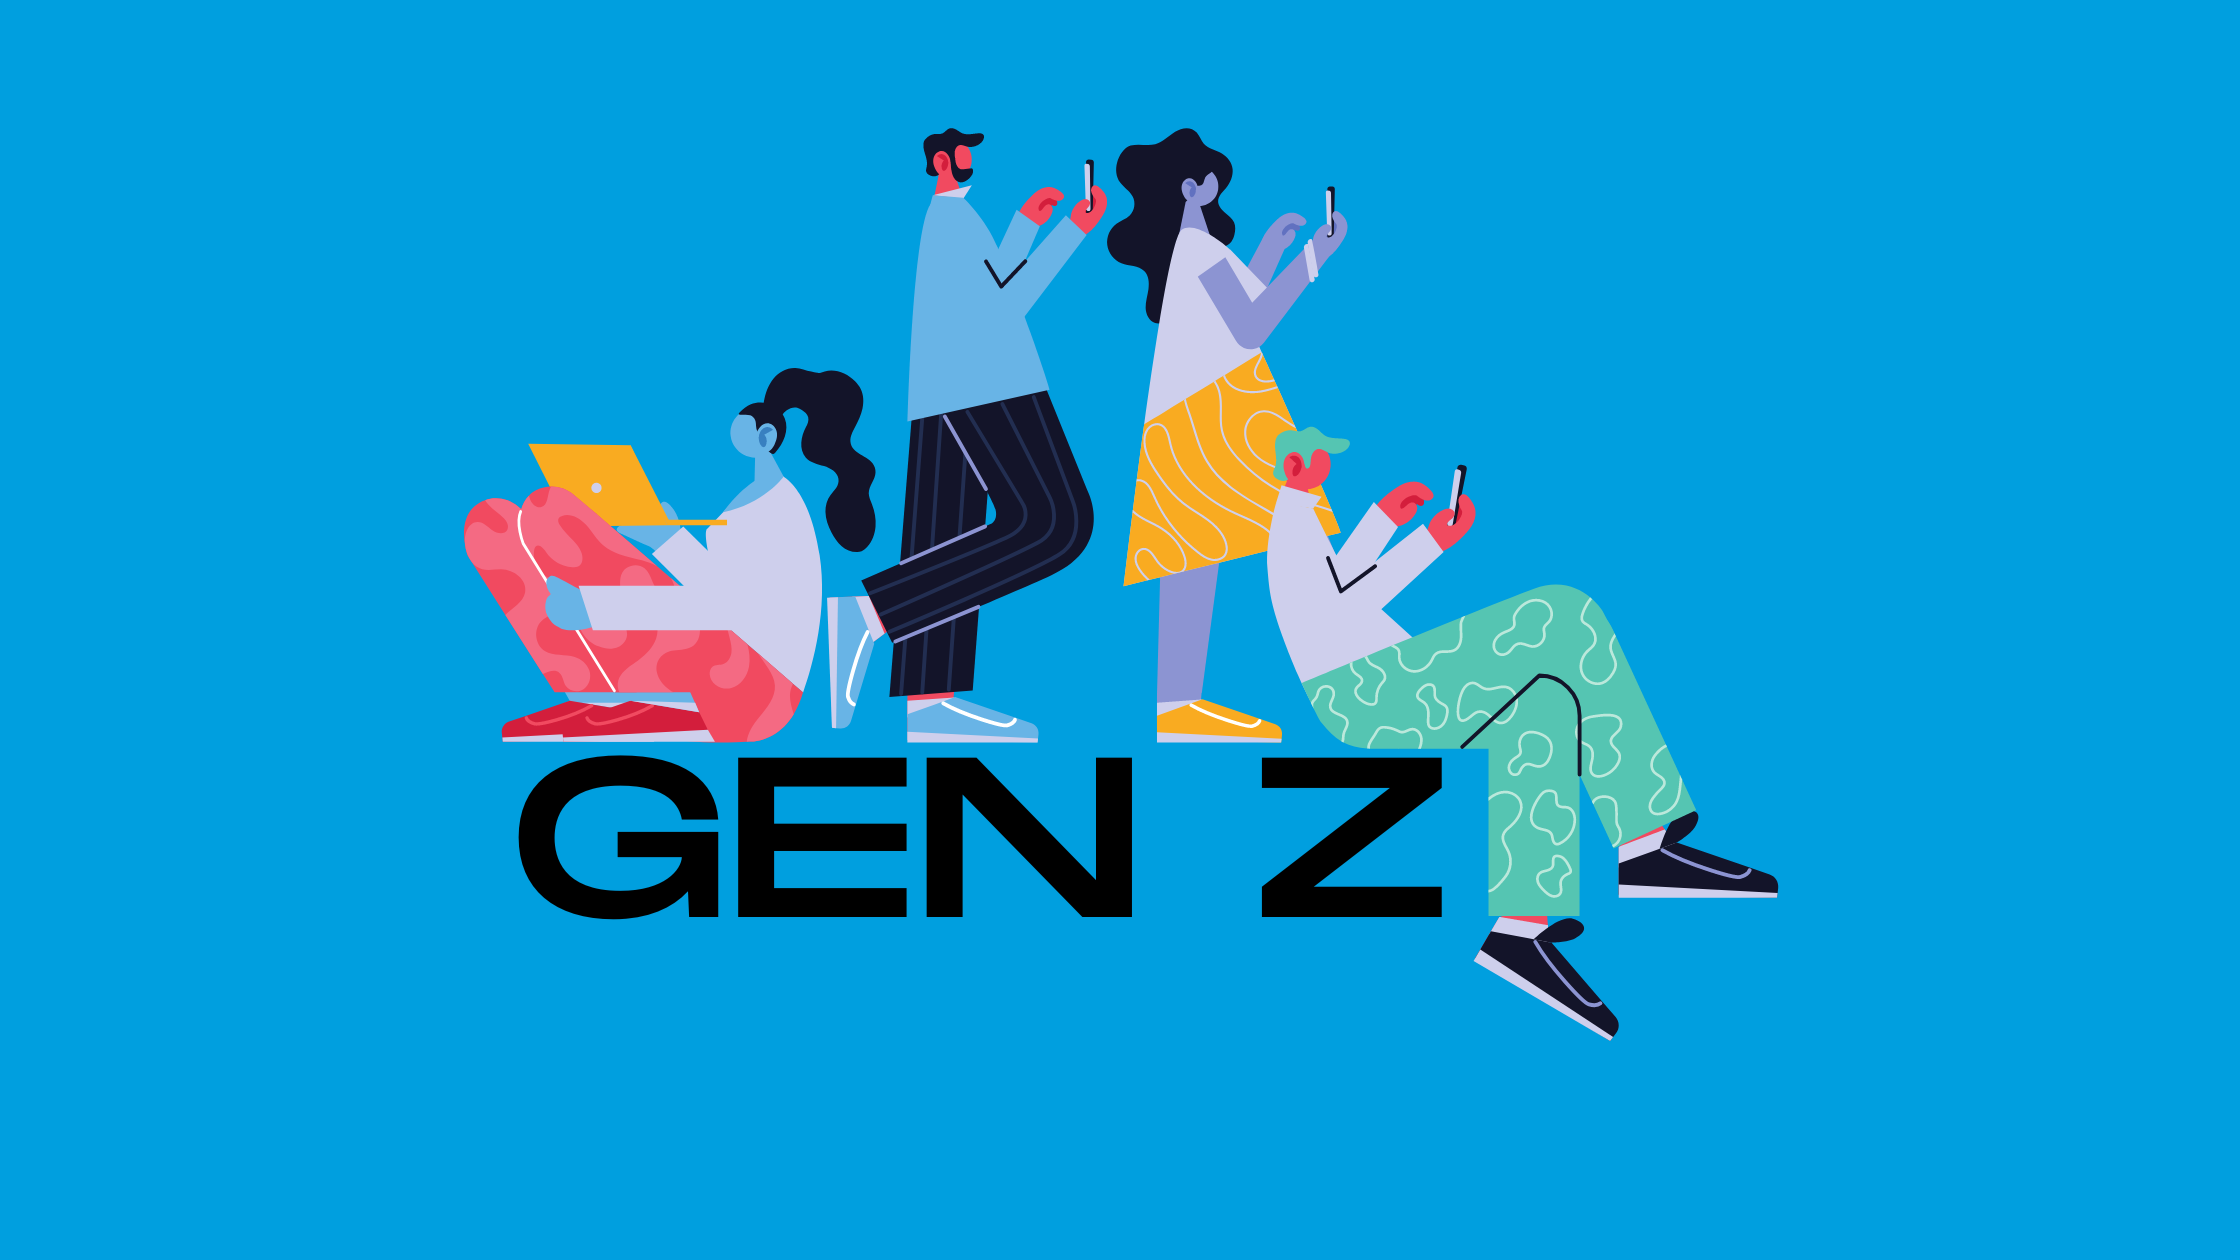 Where Millennials end and Generation Z begins